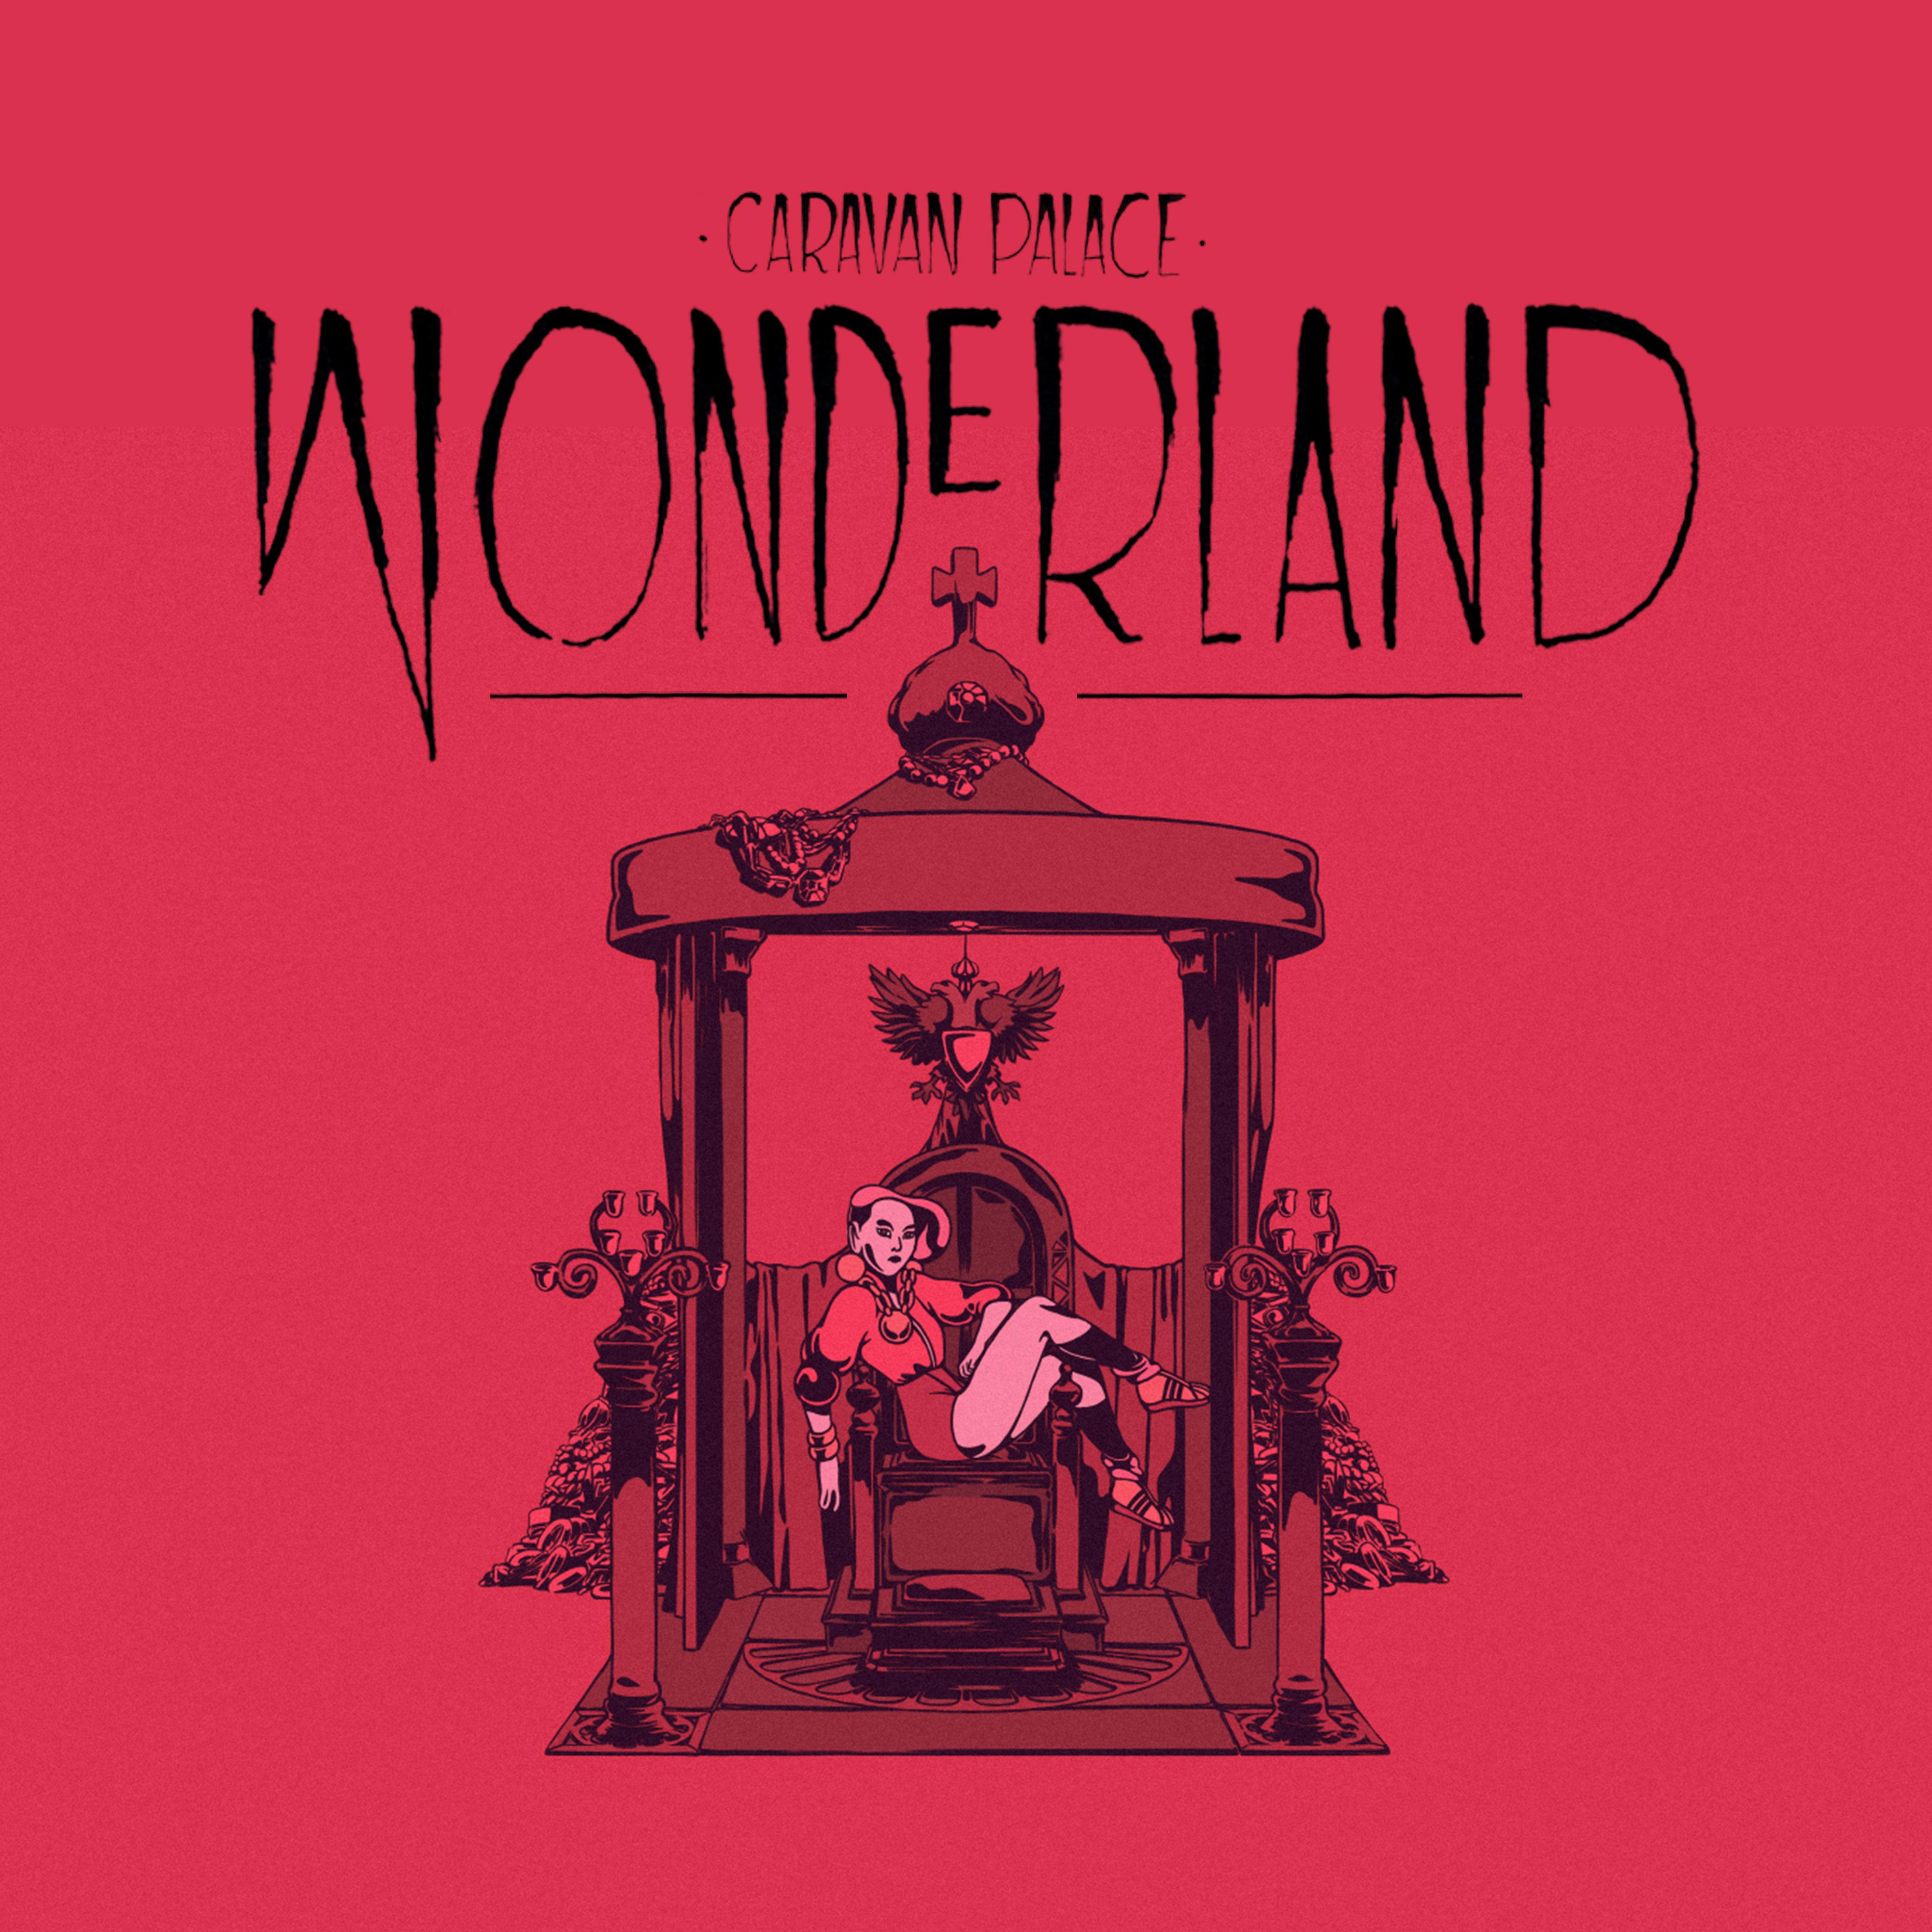 Wonderland - Single专辑